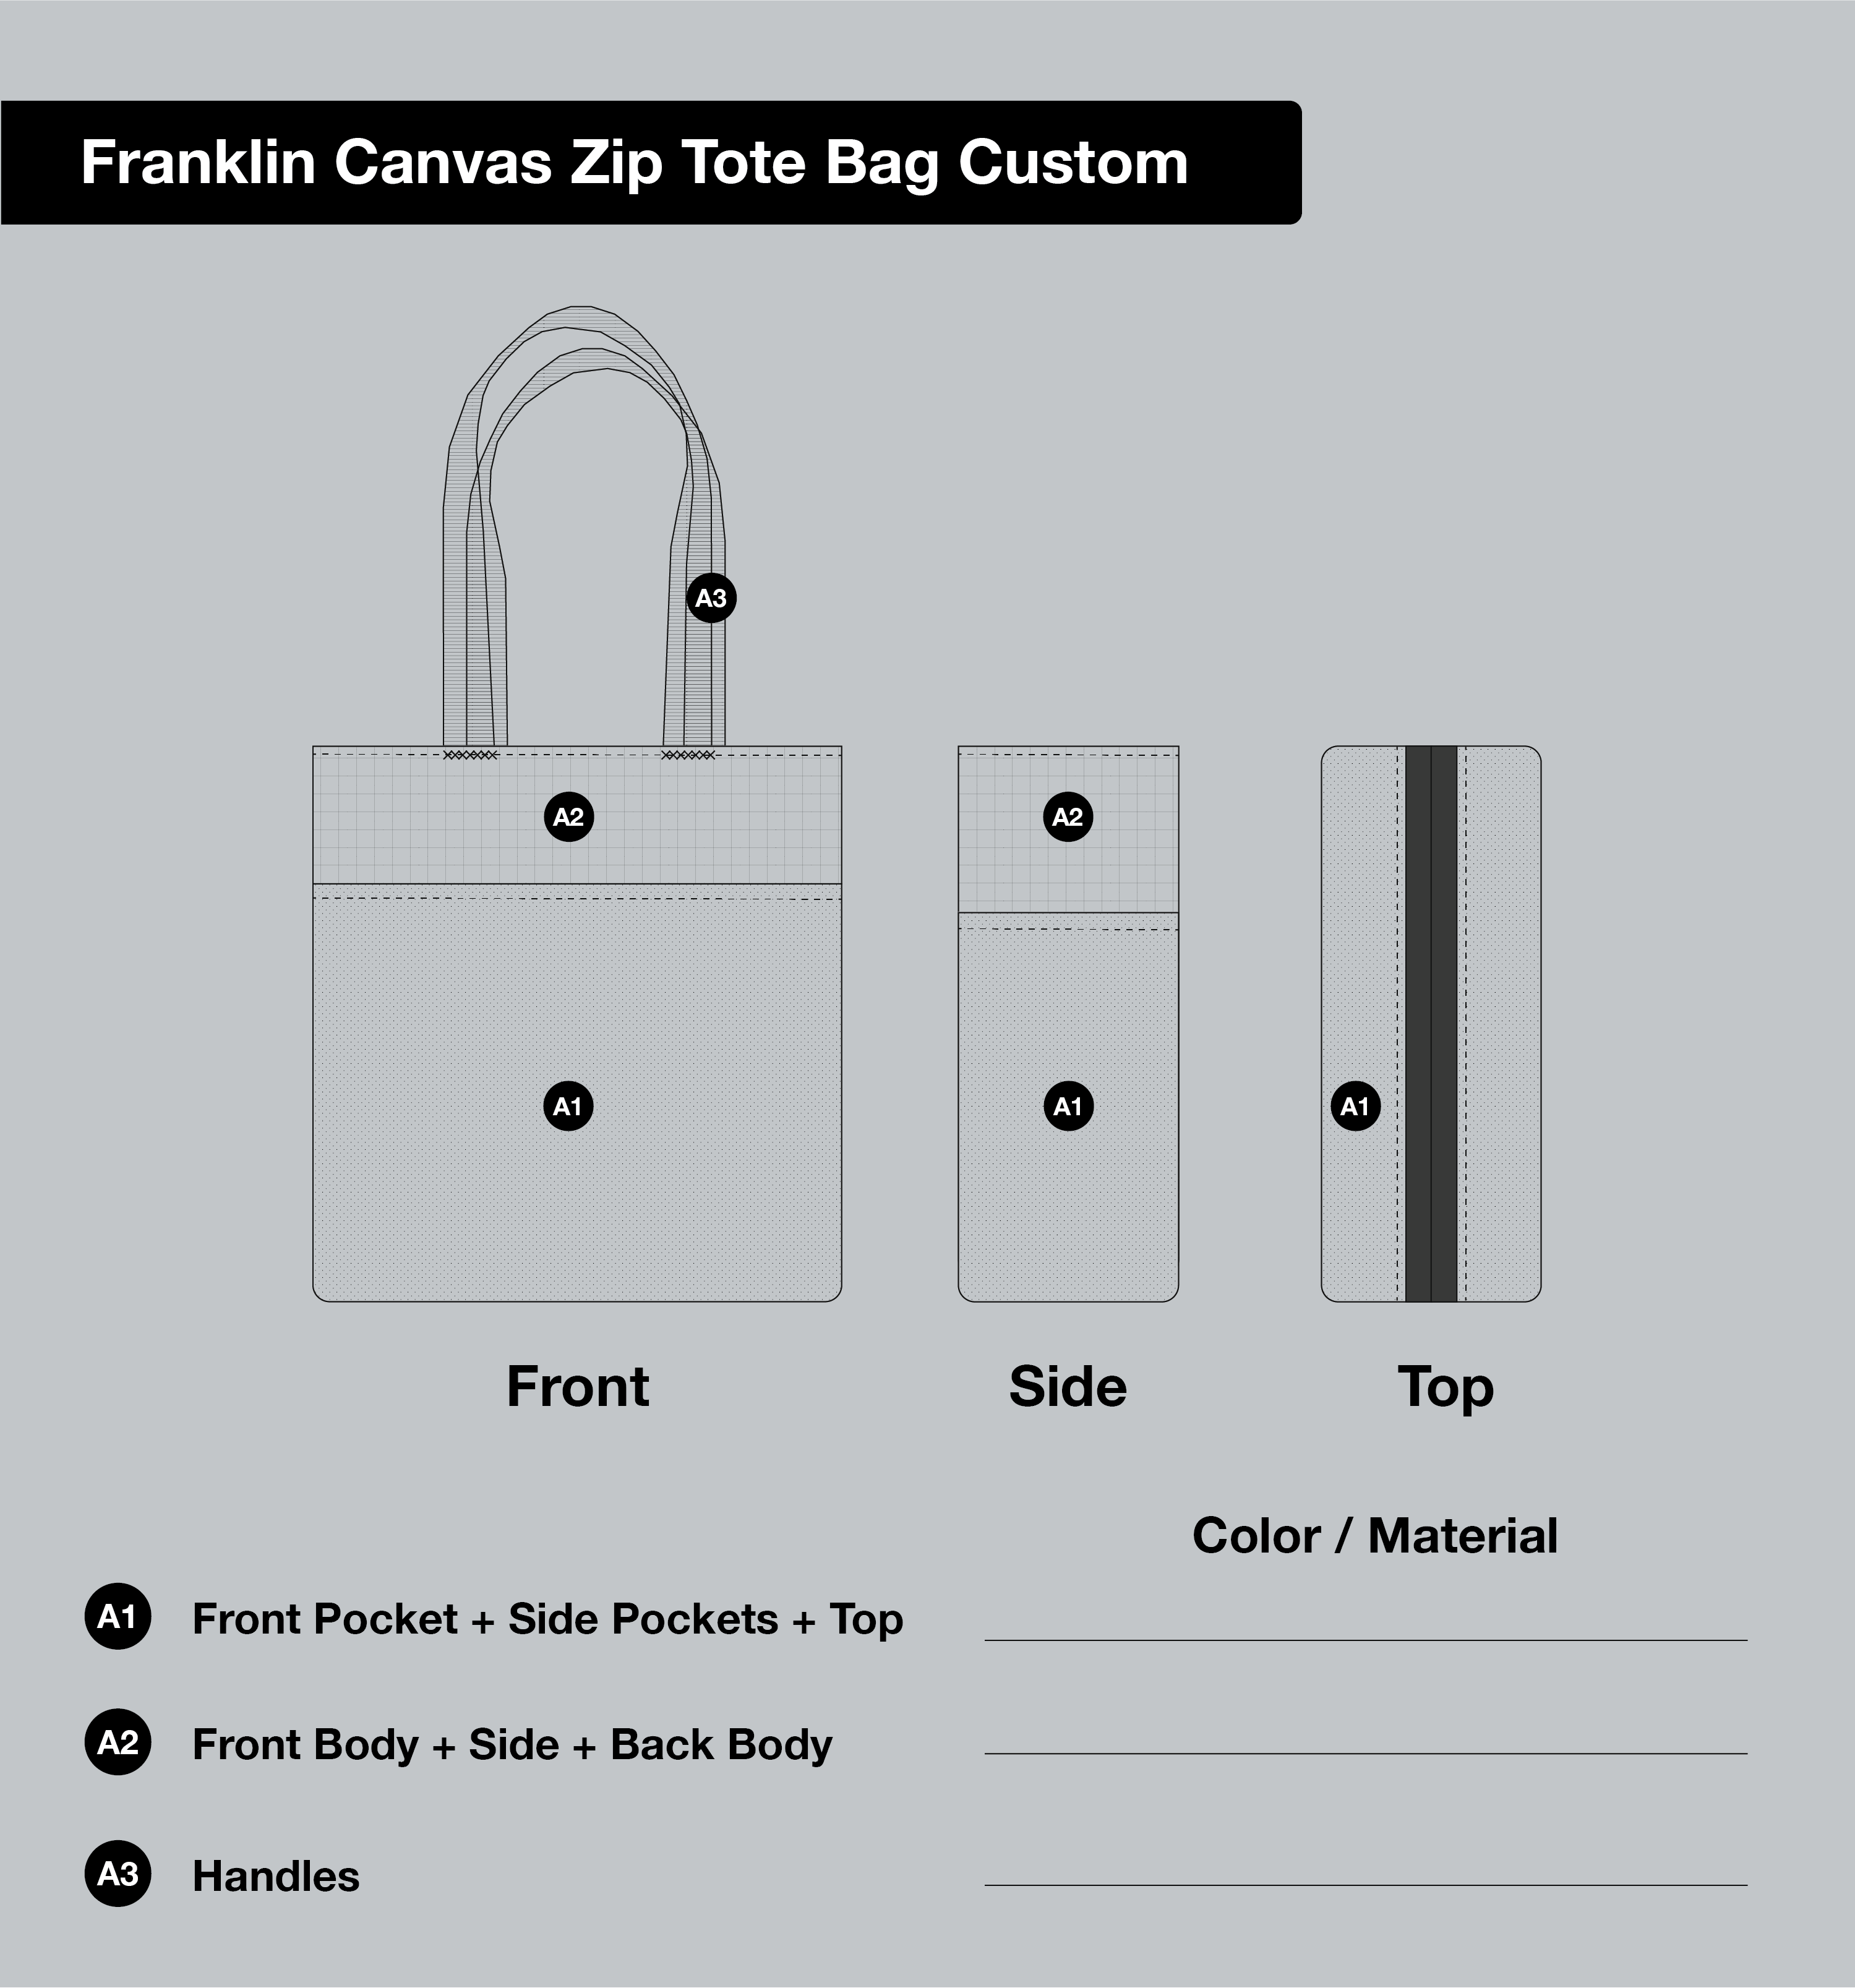 Franklin Canvas Zip Tote Bag Custom